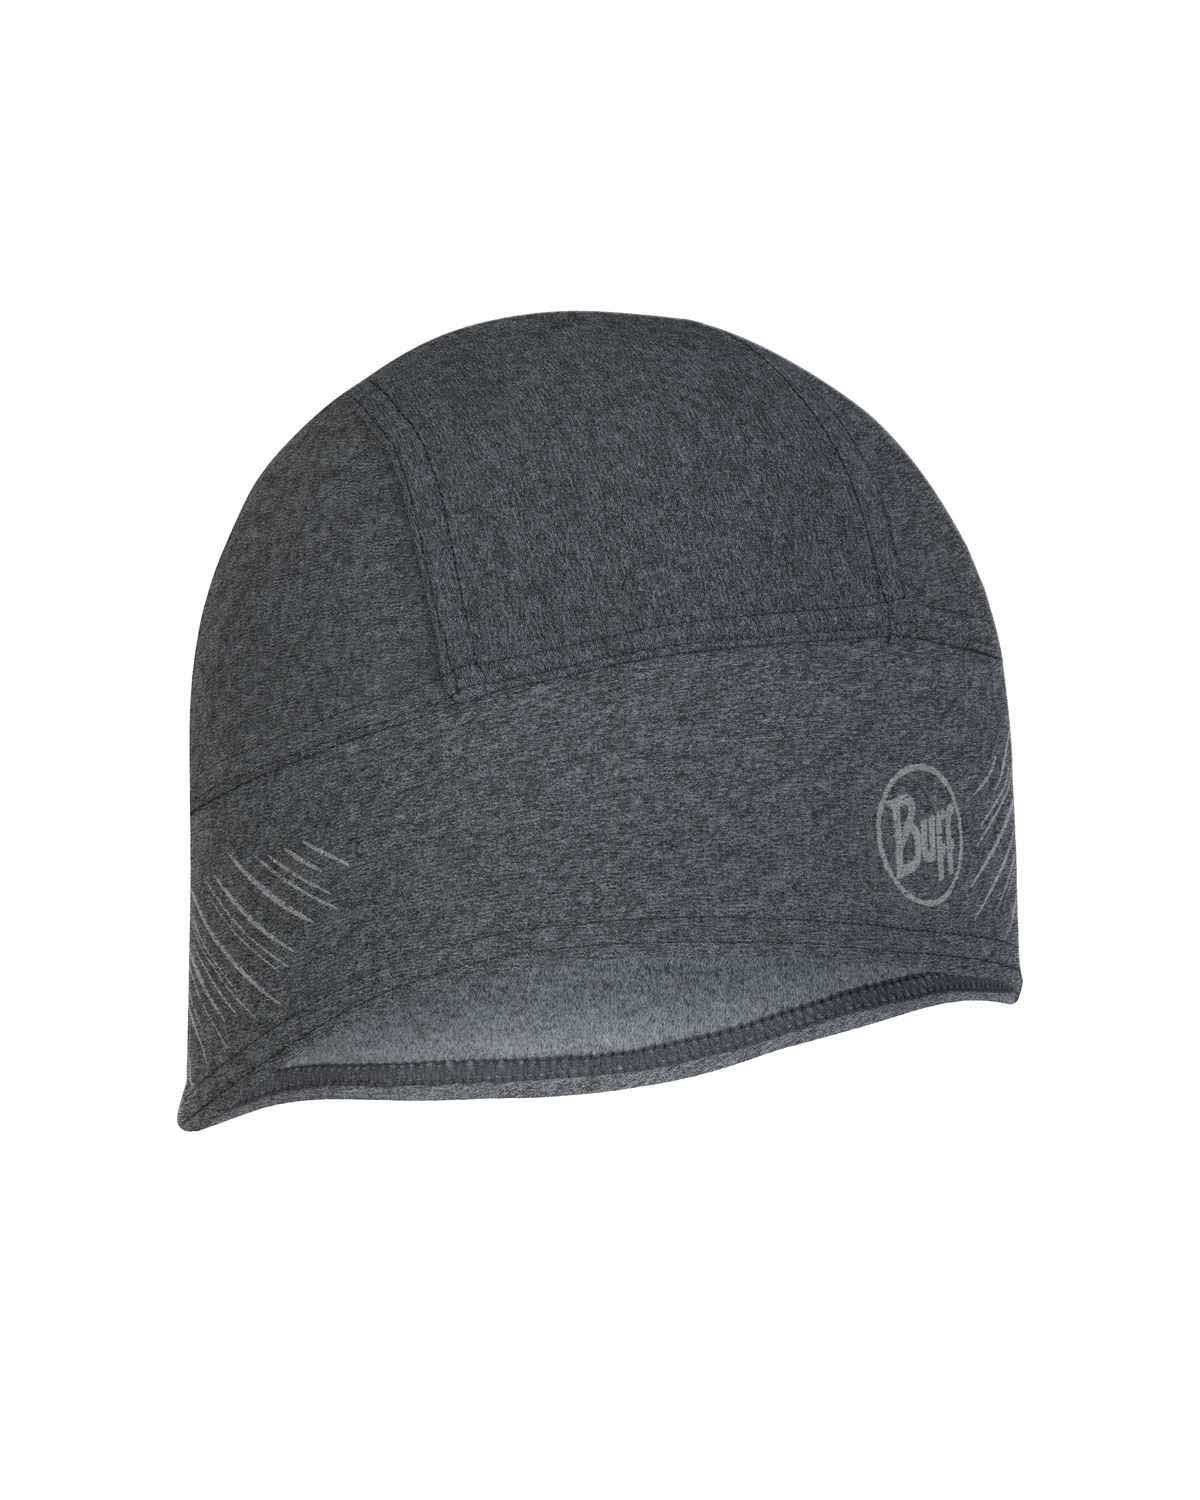 Шапка Buff Tech fleece hat R_grey - фото 1